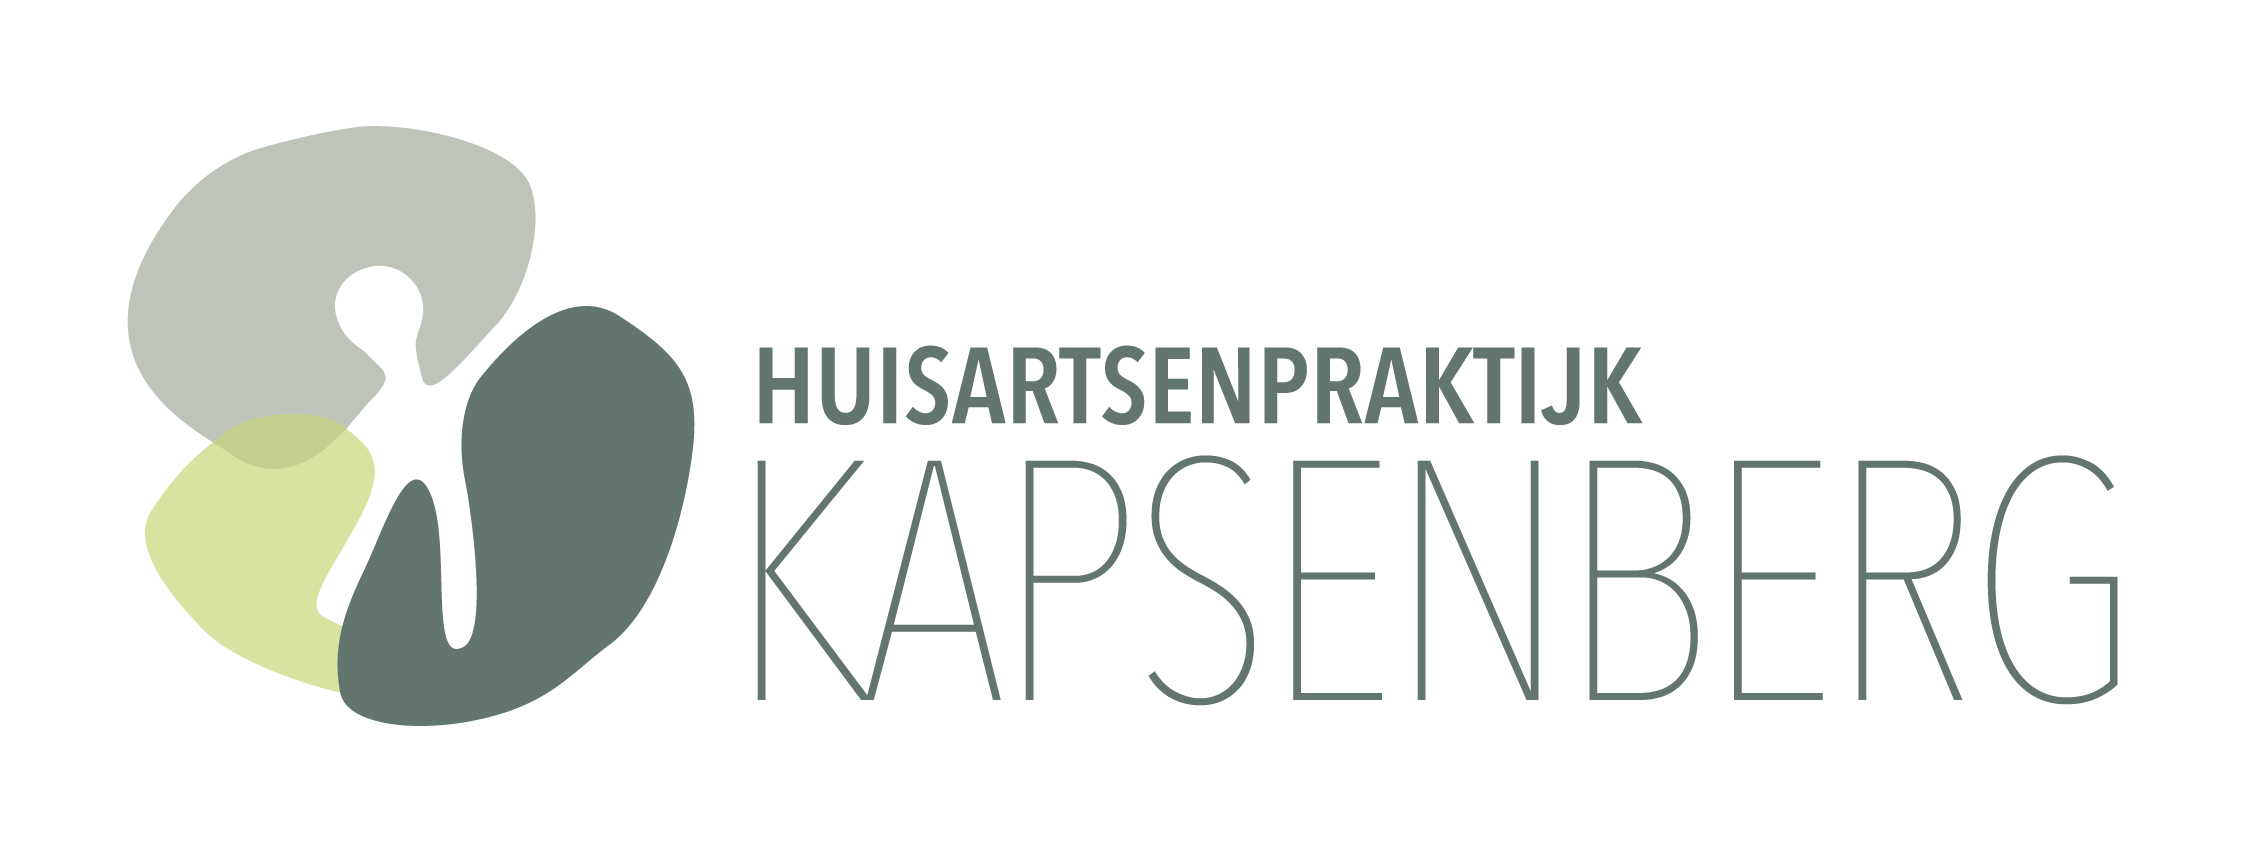 Huisartsenpraktijk Kapsenberg